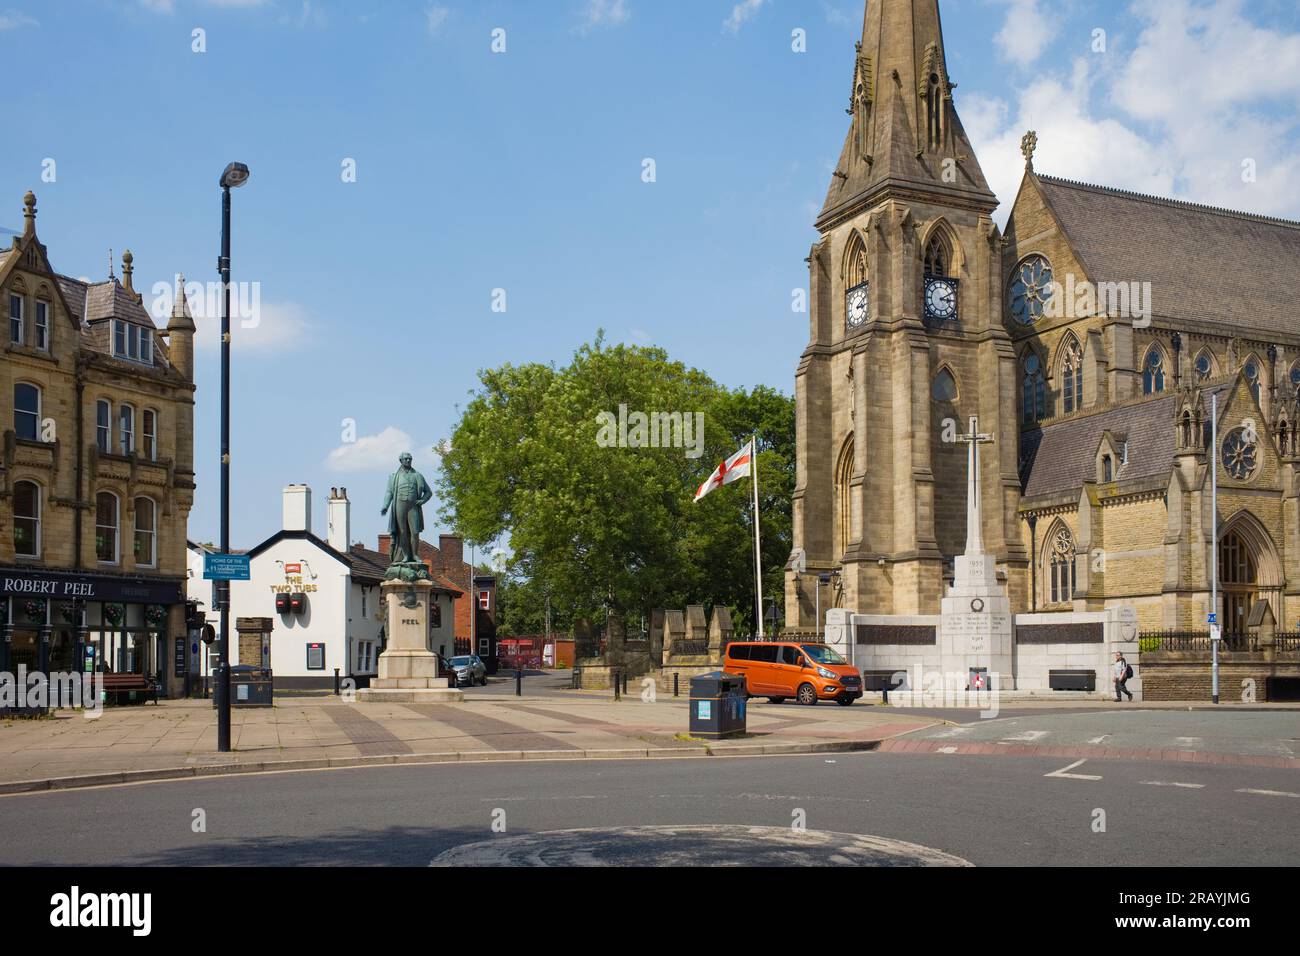 Platz in Bury mit Sir Robert Peel Statue und Kriegsdenkmal Stockfoto